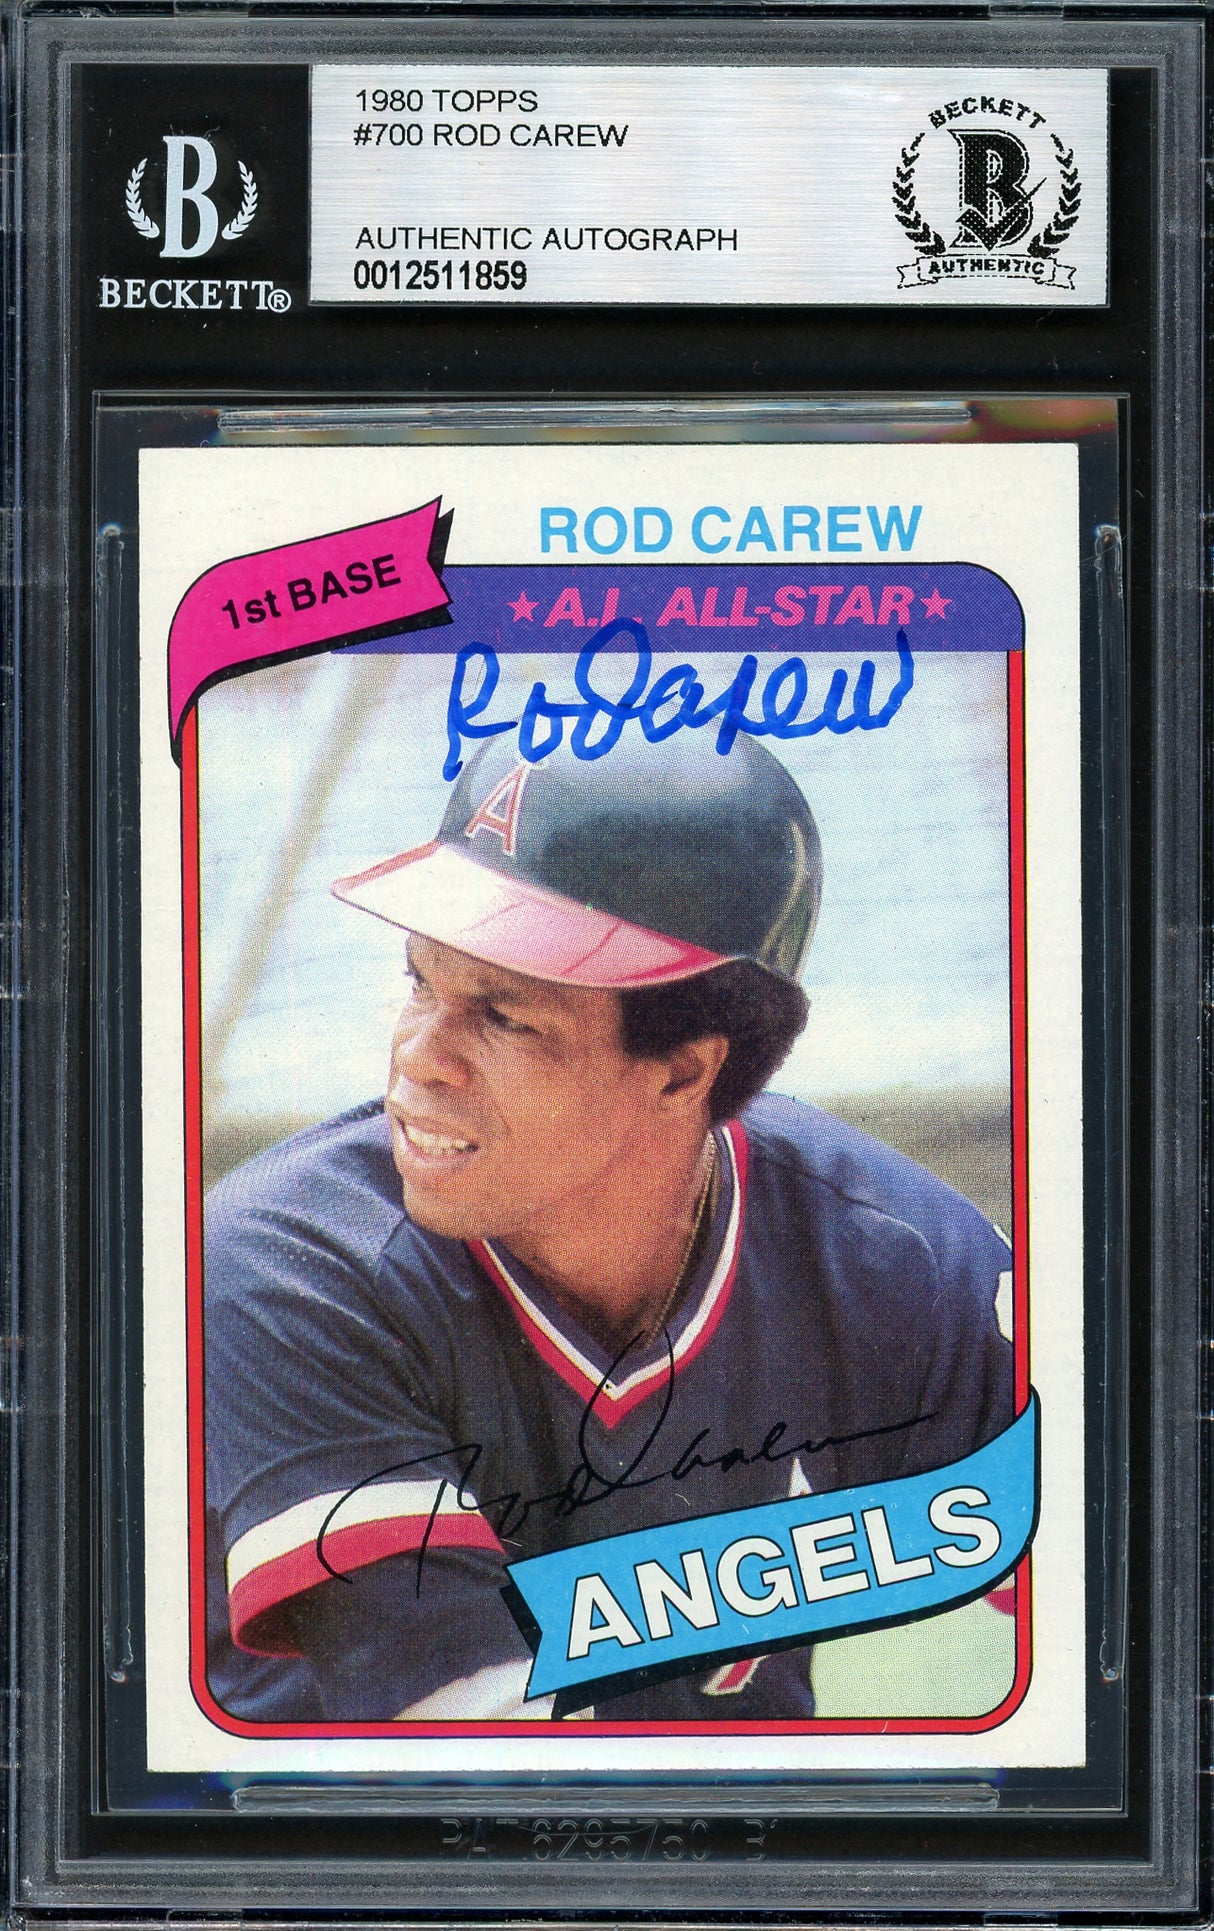 Rod Carew Autographed 1980 Topps Card #700 California Angels Beckett BAS Stock #186109